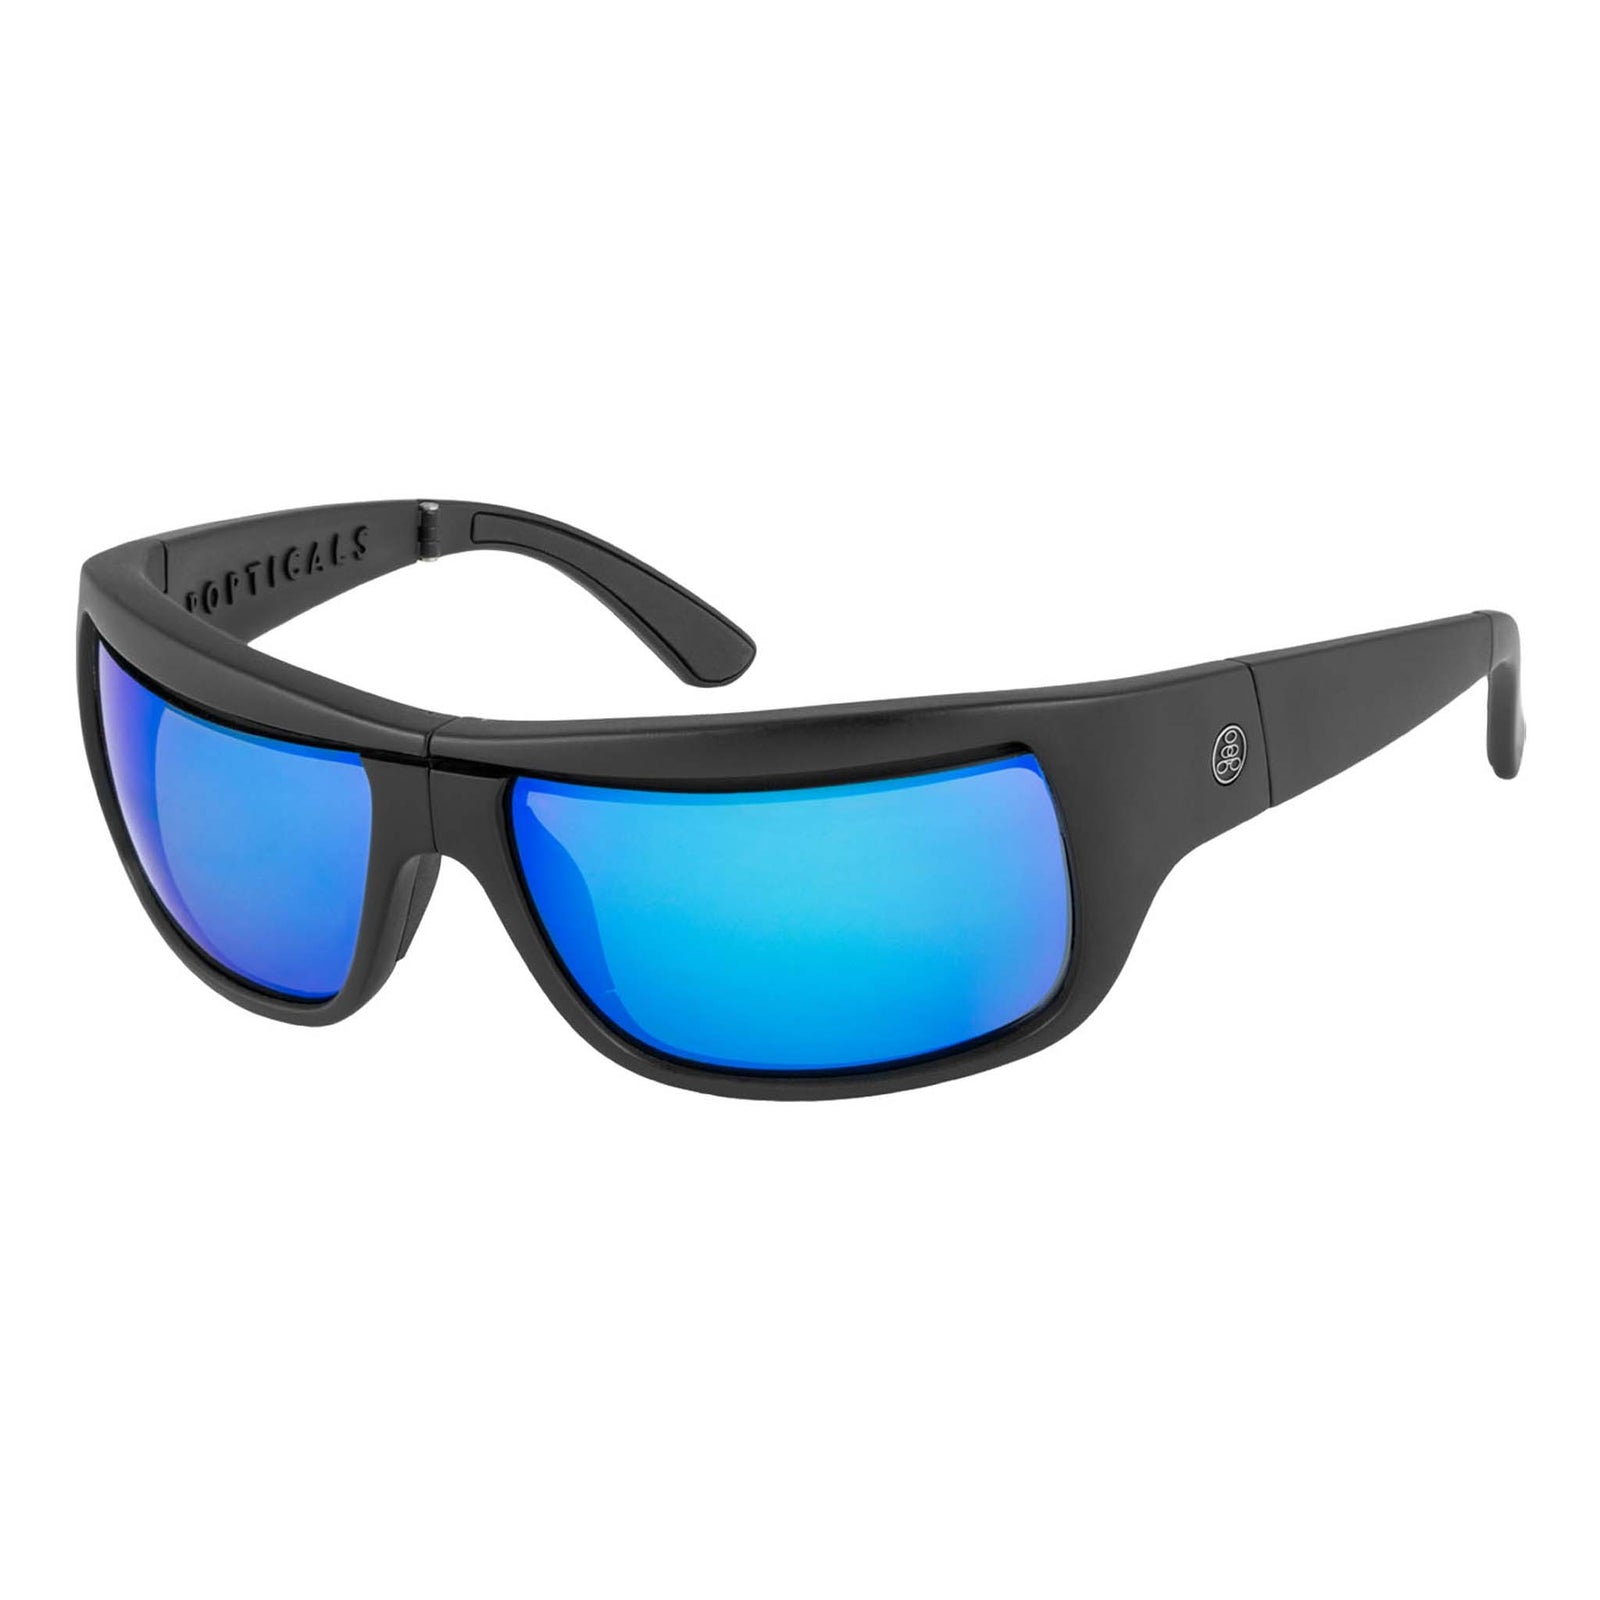 Popticals, Premium Compact Sunglasses, PopH2O, 010070-BMUN, Polarized Sunglasses, Matte Black Frame, Gray Lenses w/Blue Mirror Finish, Glam View